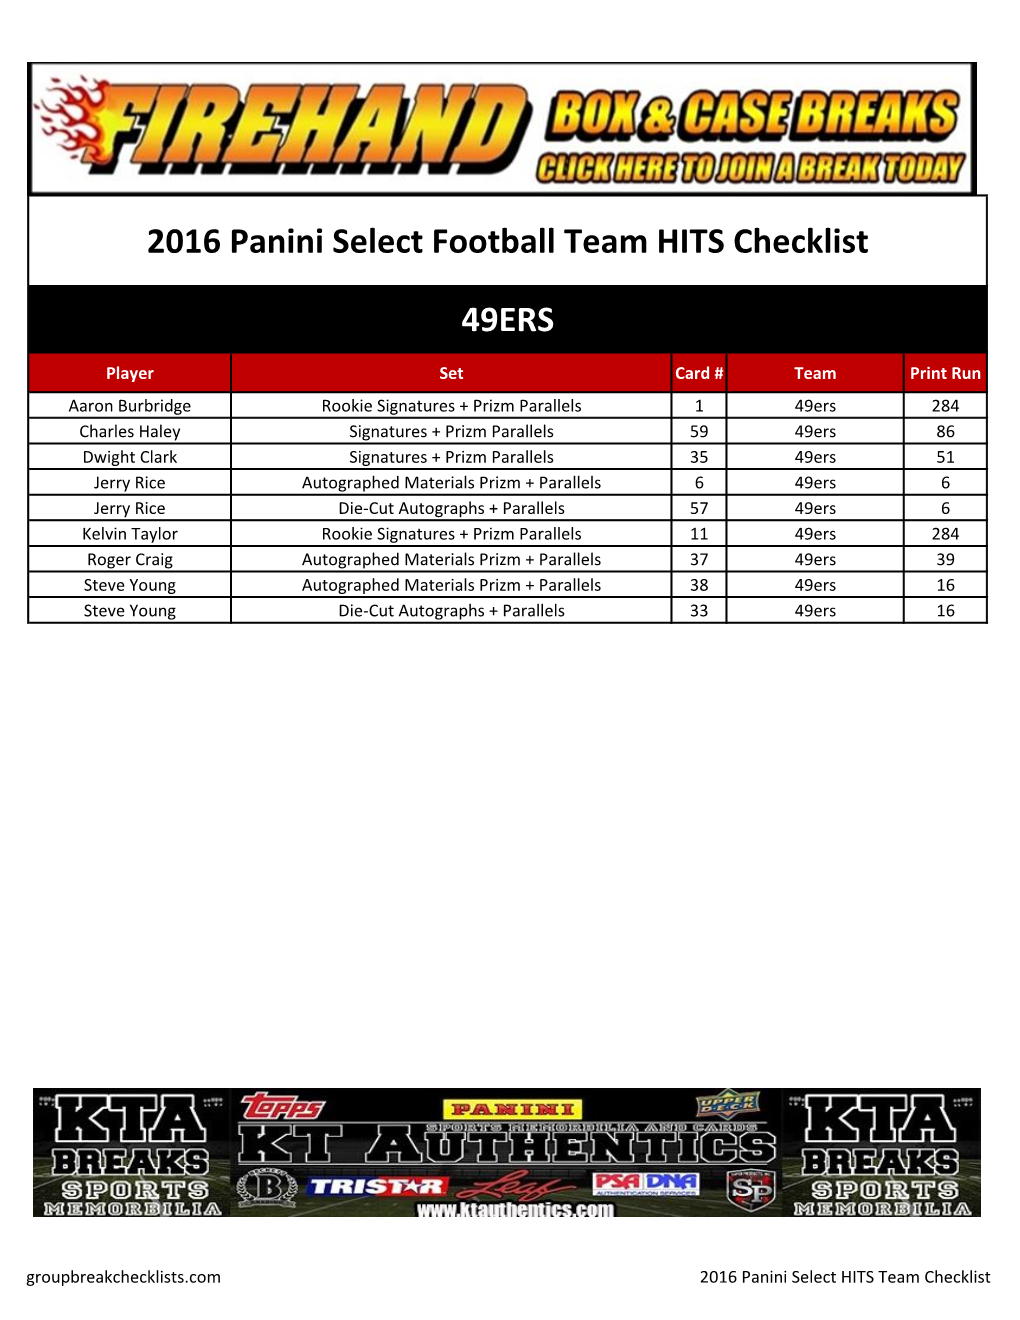 2016 Select Football Team HITS Checklist;